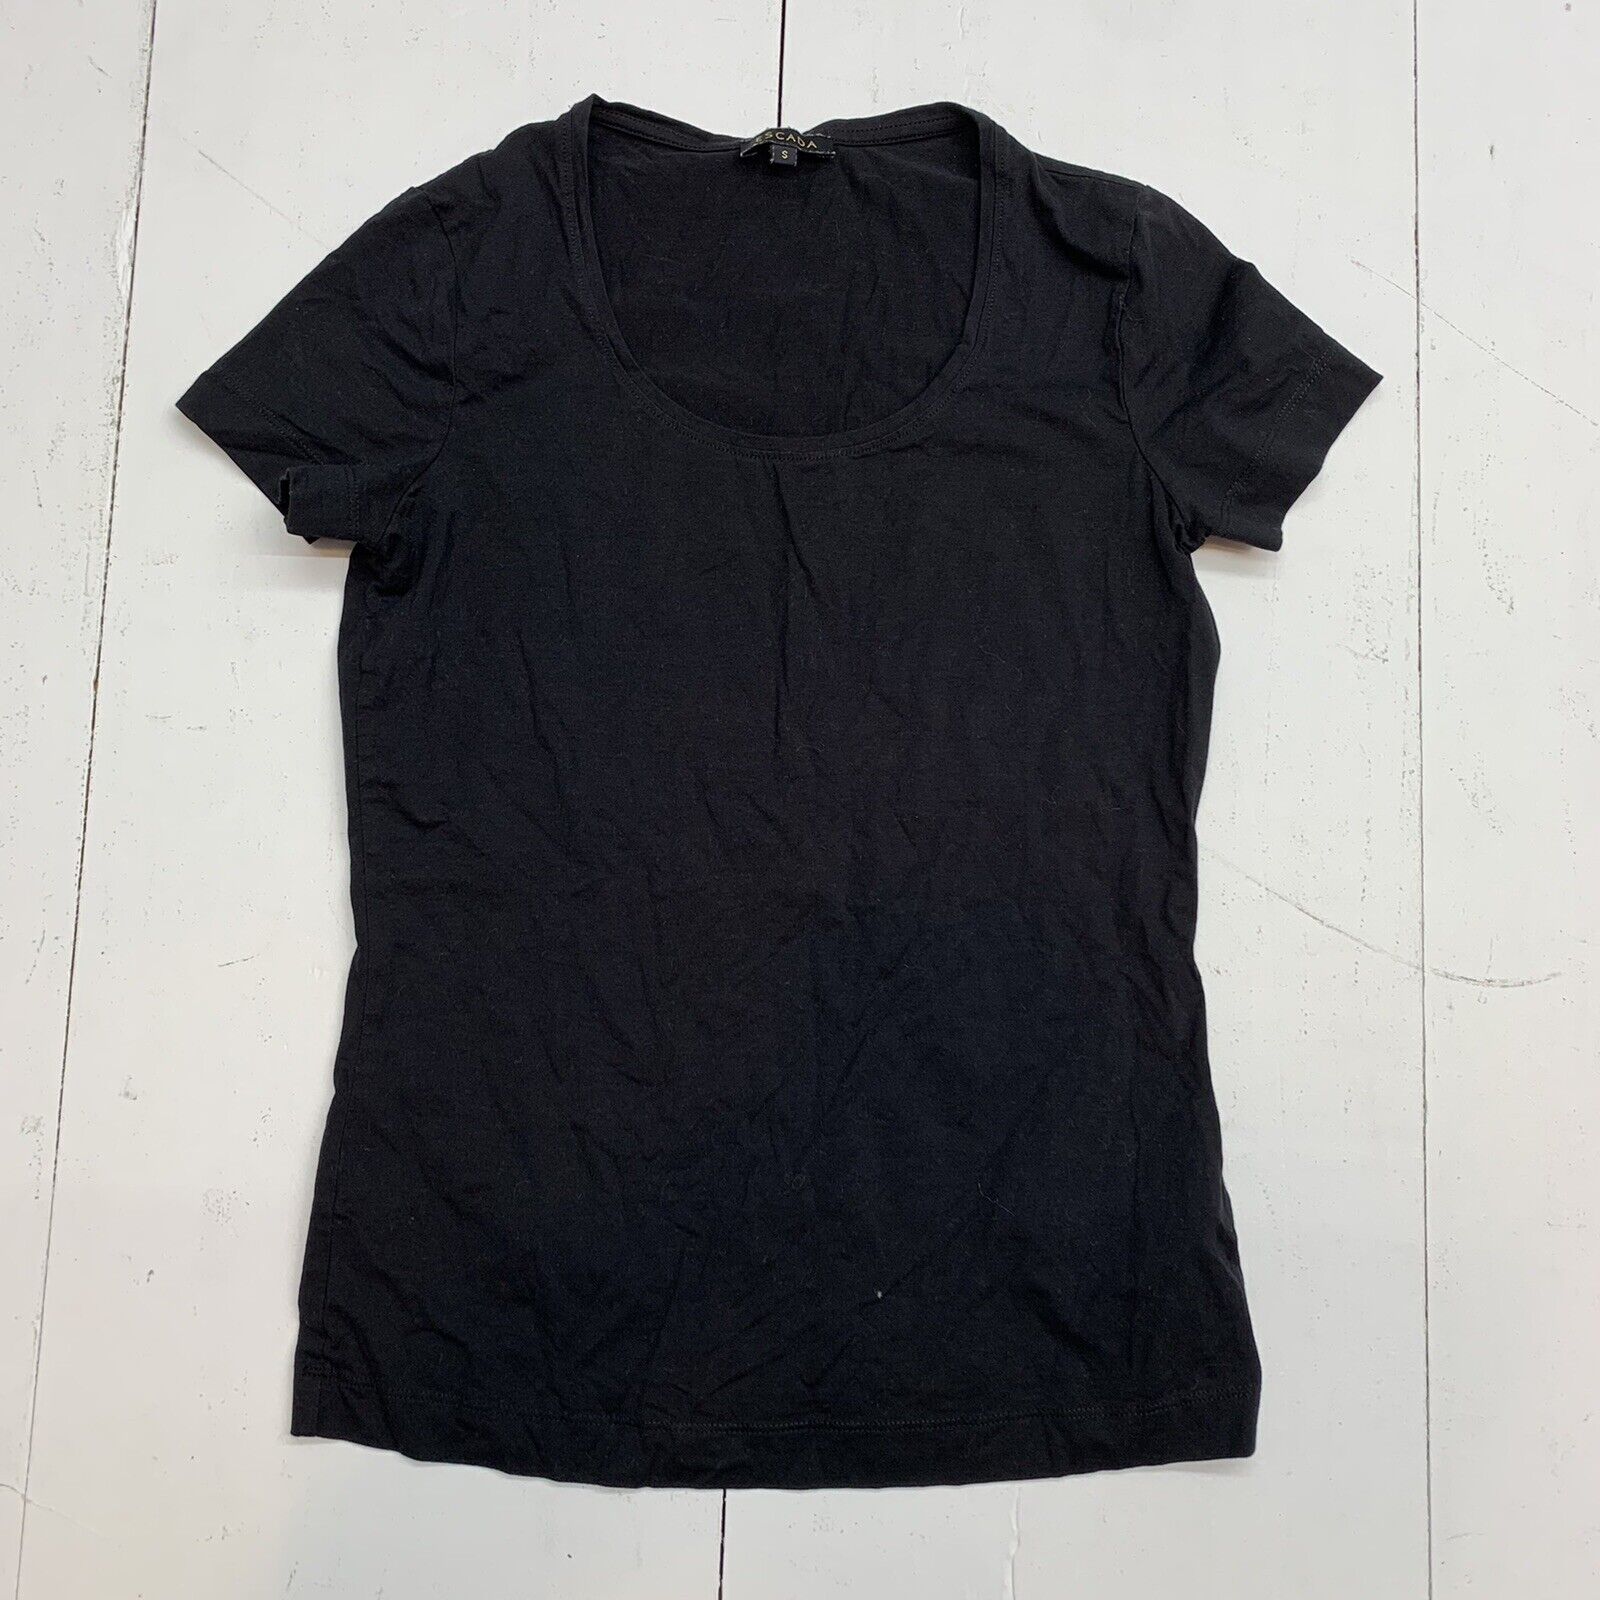 Escada Sport Black Long Sleeve Shirt Womens size medium - beyond